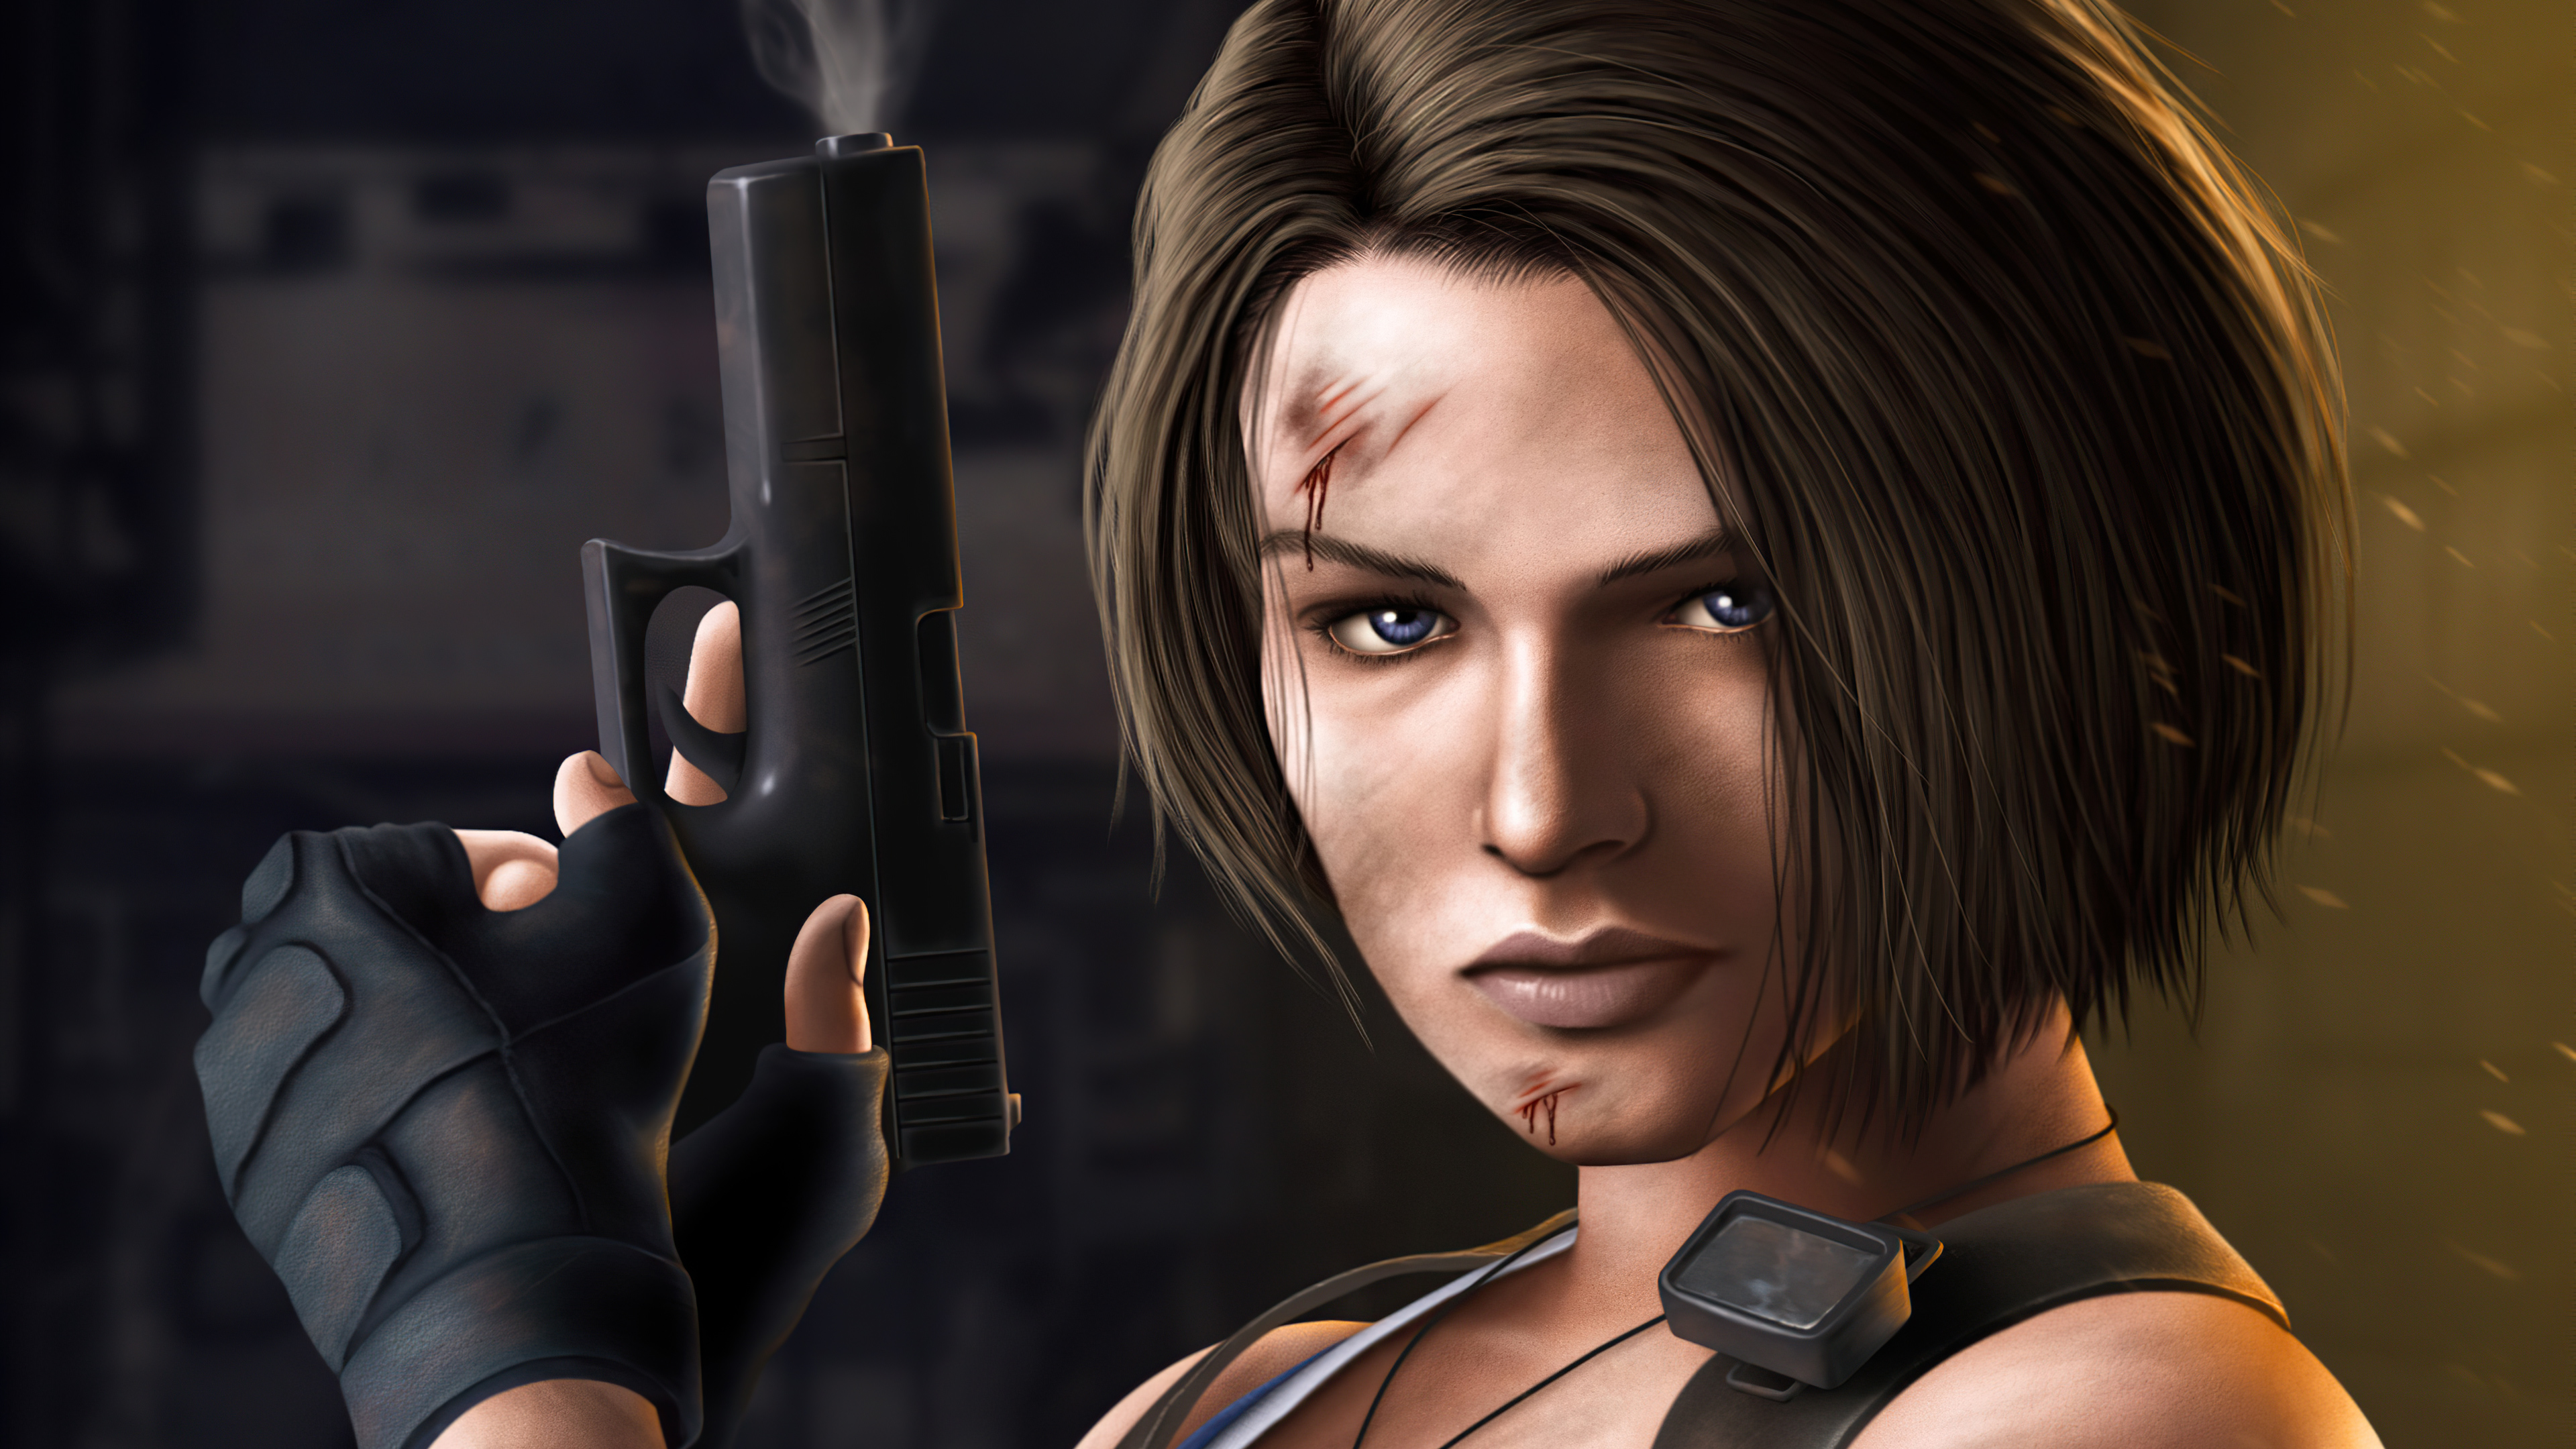 Jill Valentine HD Resident Evil 3 Wallpapers, HD Wallpapers